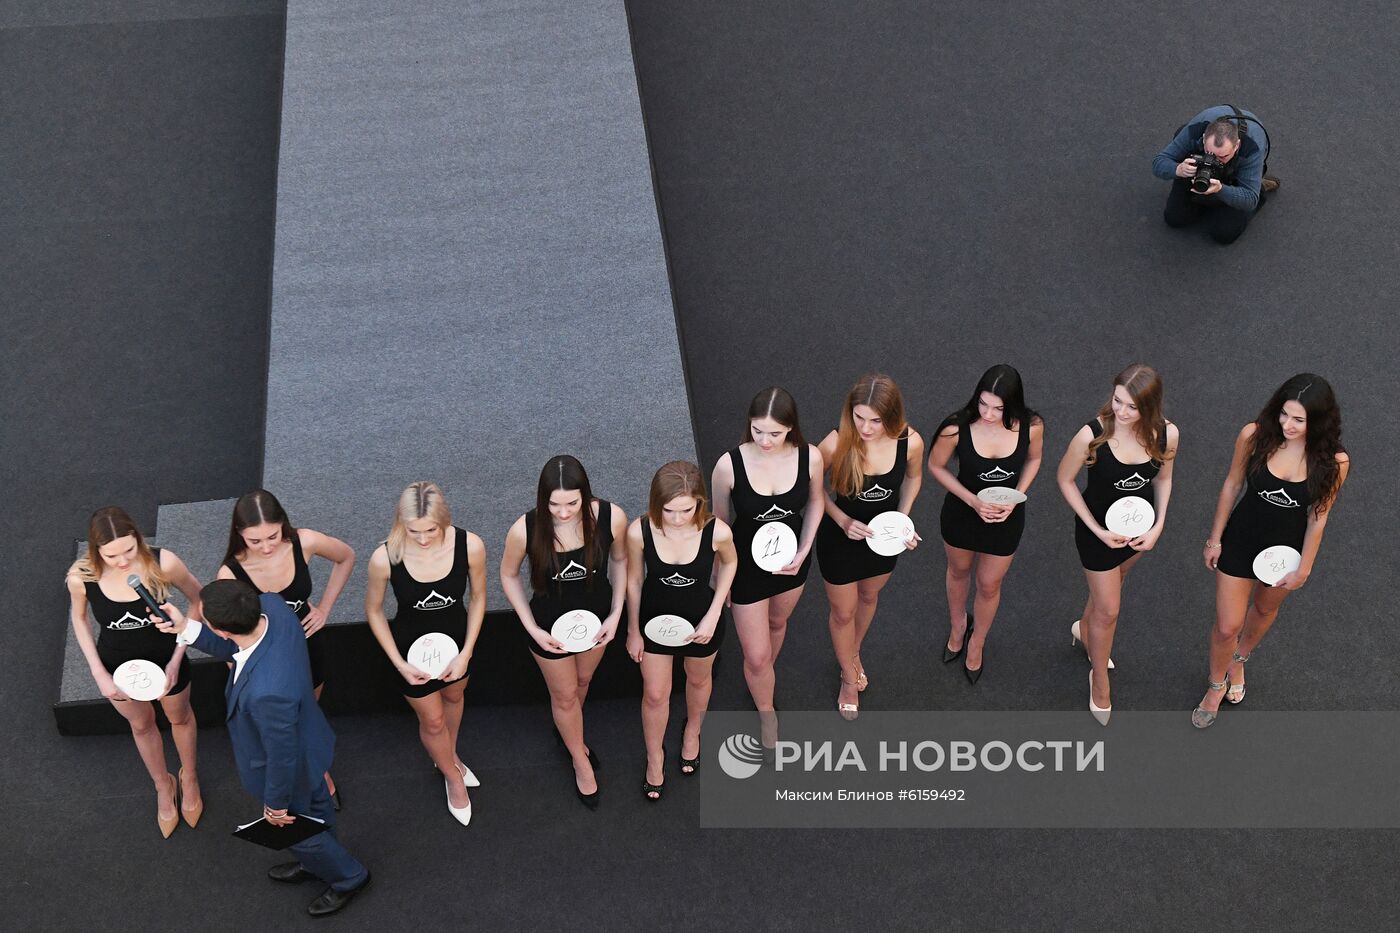 Открытый кастинг конкурса "Мисс Россия"